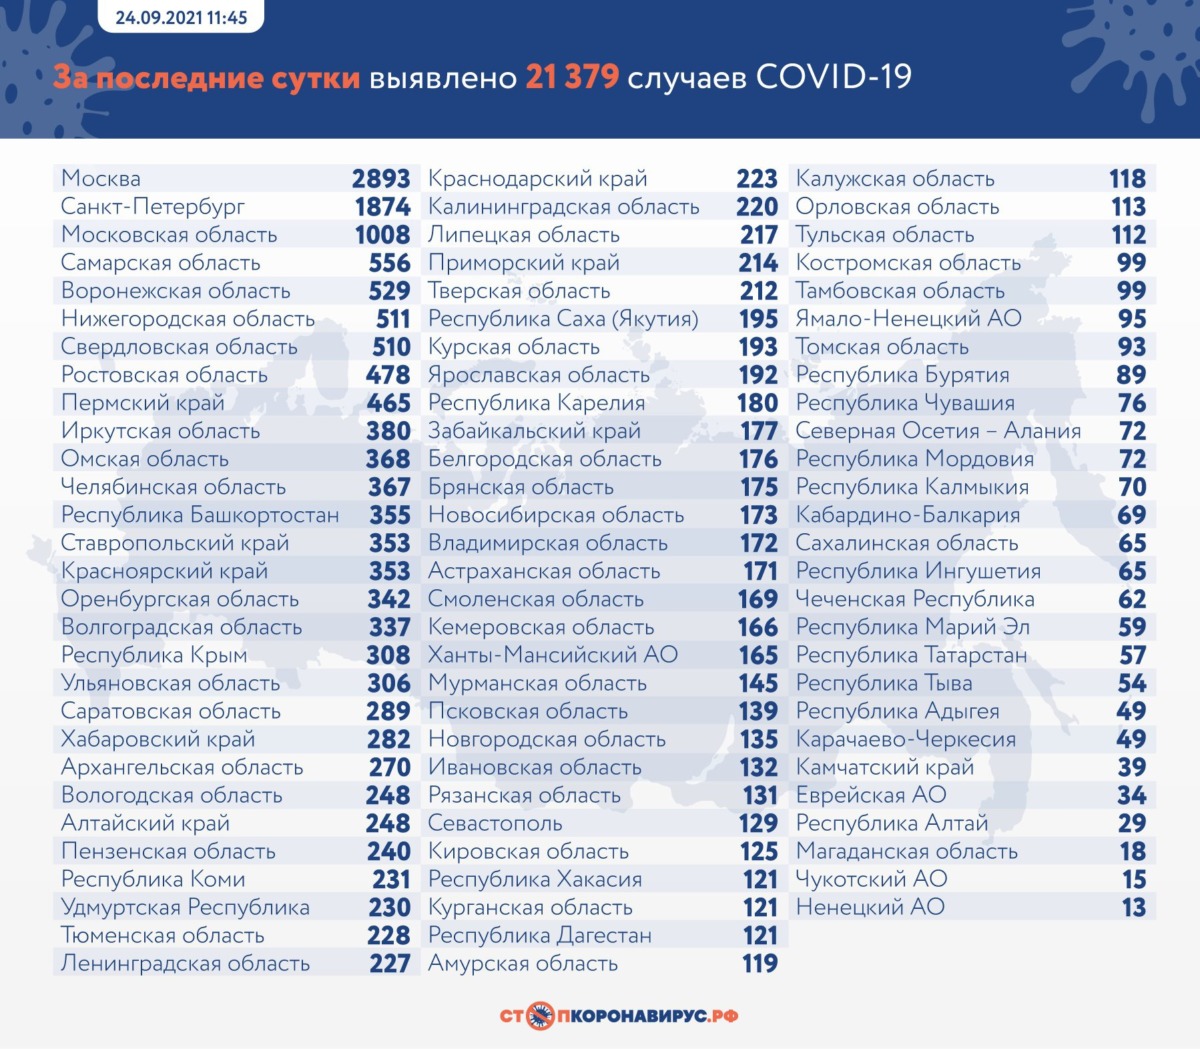 Оперативная статистика по коронавирусу в России на 24 сентября